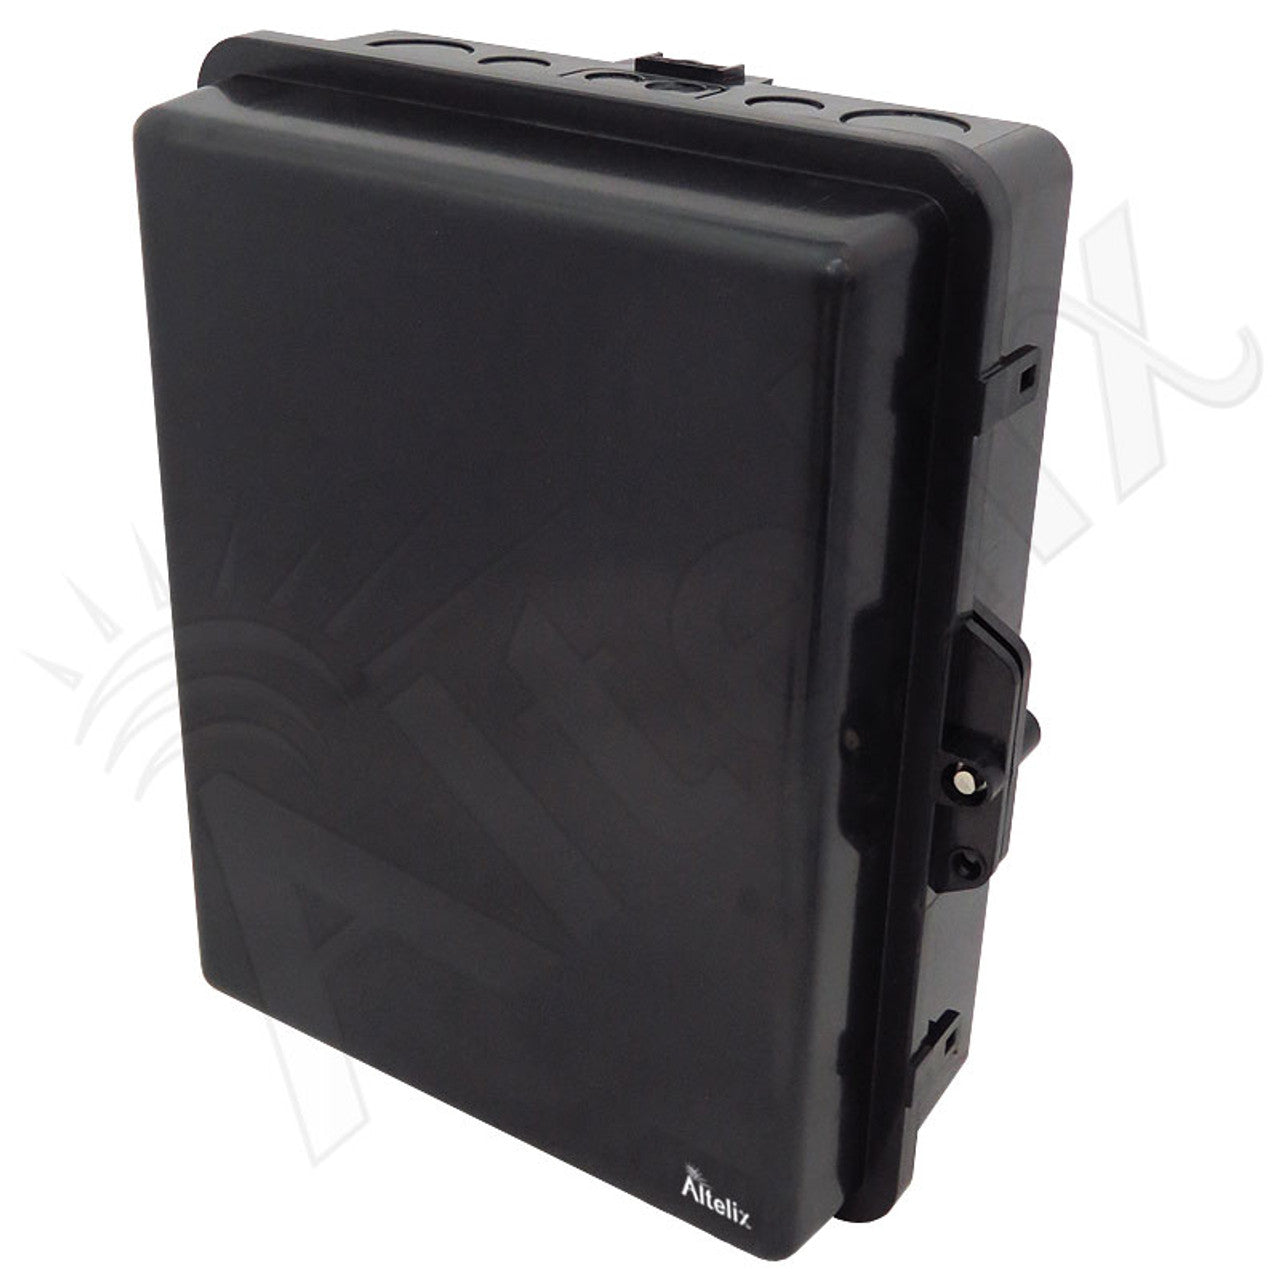 Altelix 14x11x5 PC + ABS Weatherproof Utility Box NEMA Enclosure with Hinged Door - 0